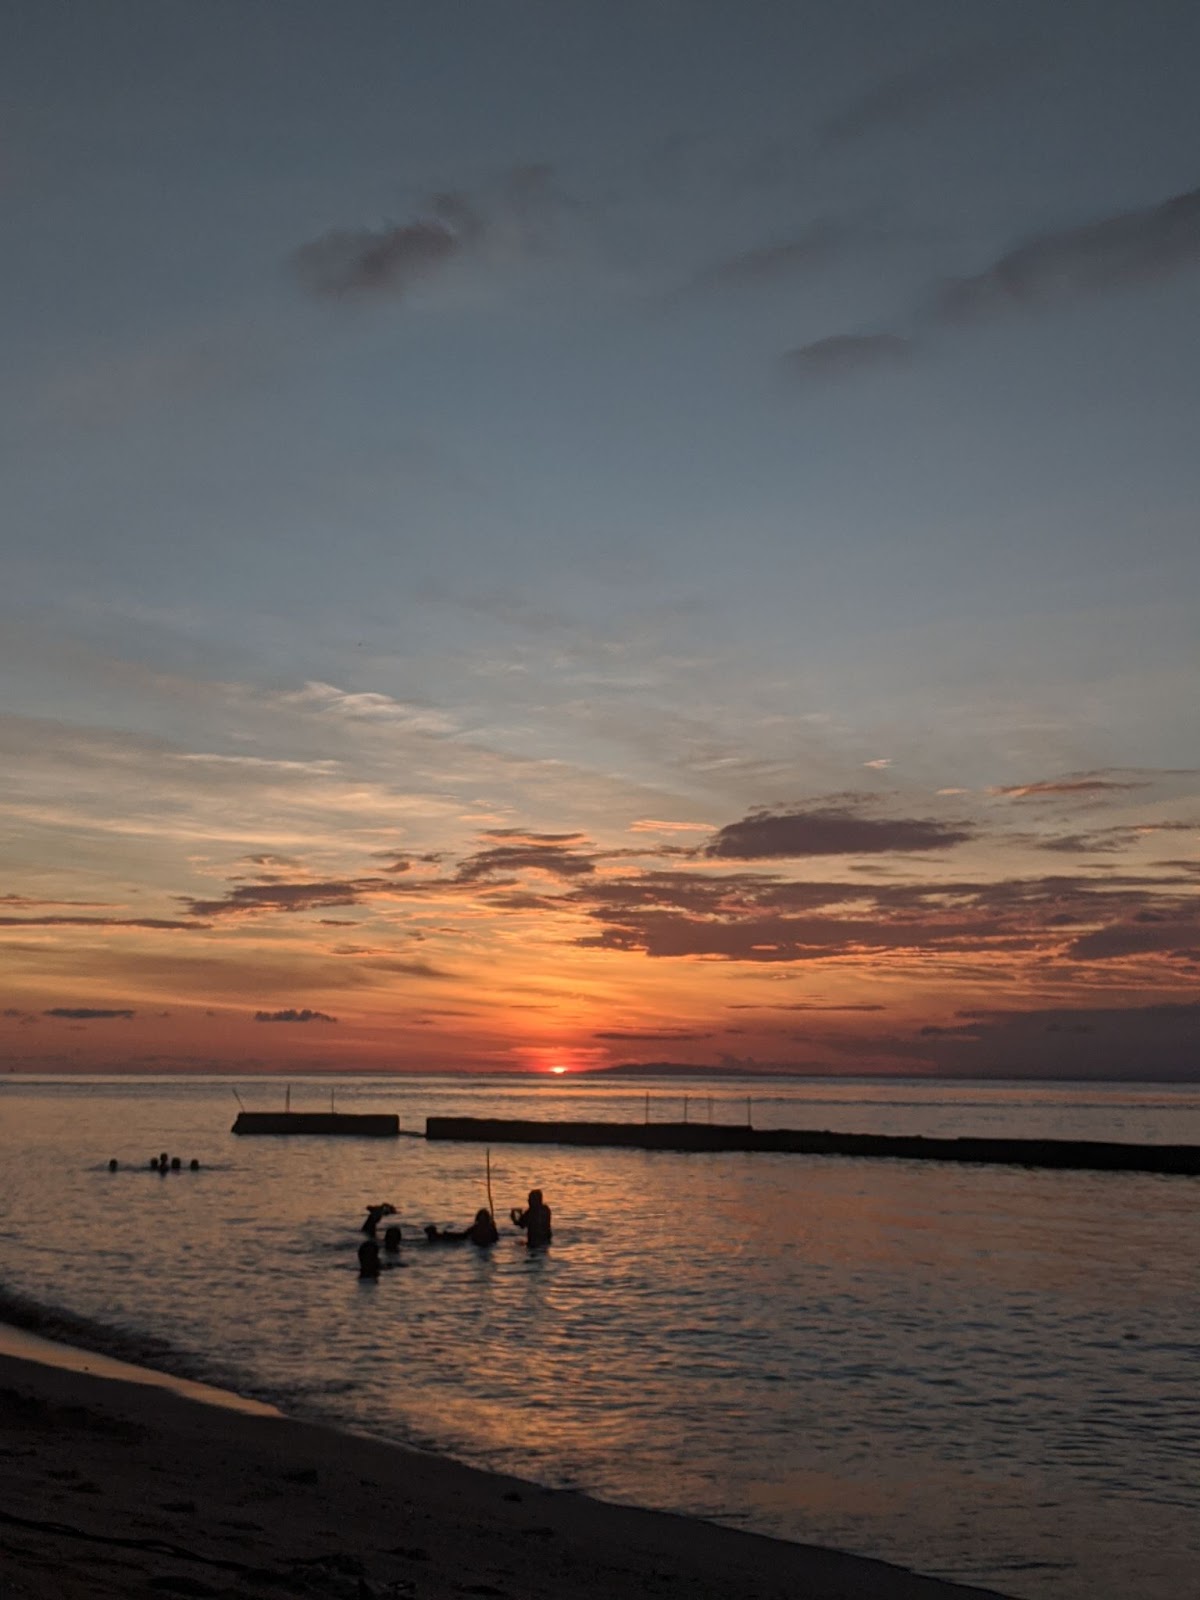 a beautiful image of the sunset on Wakatobi, Indonesia a great tourism destination